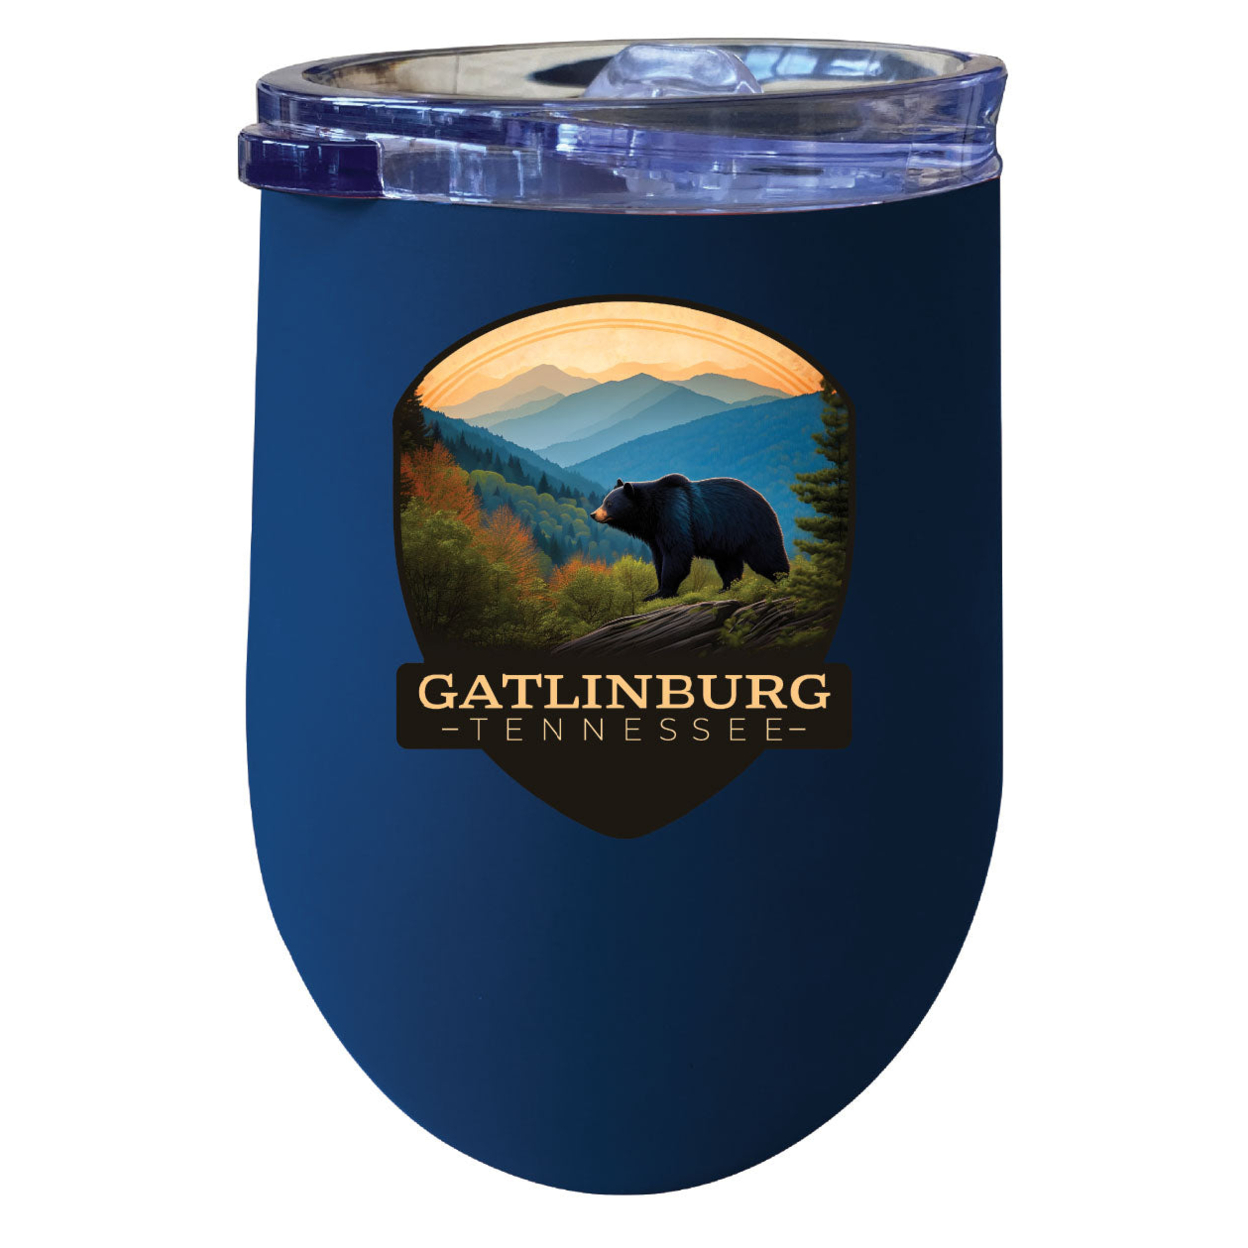 Gatlinburg Tennessee Souvenir 12 Oz Insulated Wine Stainless Steel Tumbler - Navy, A